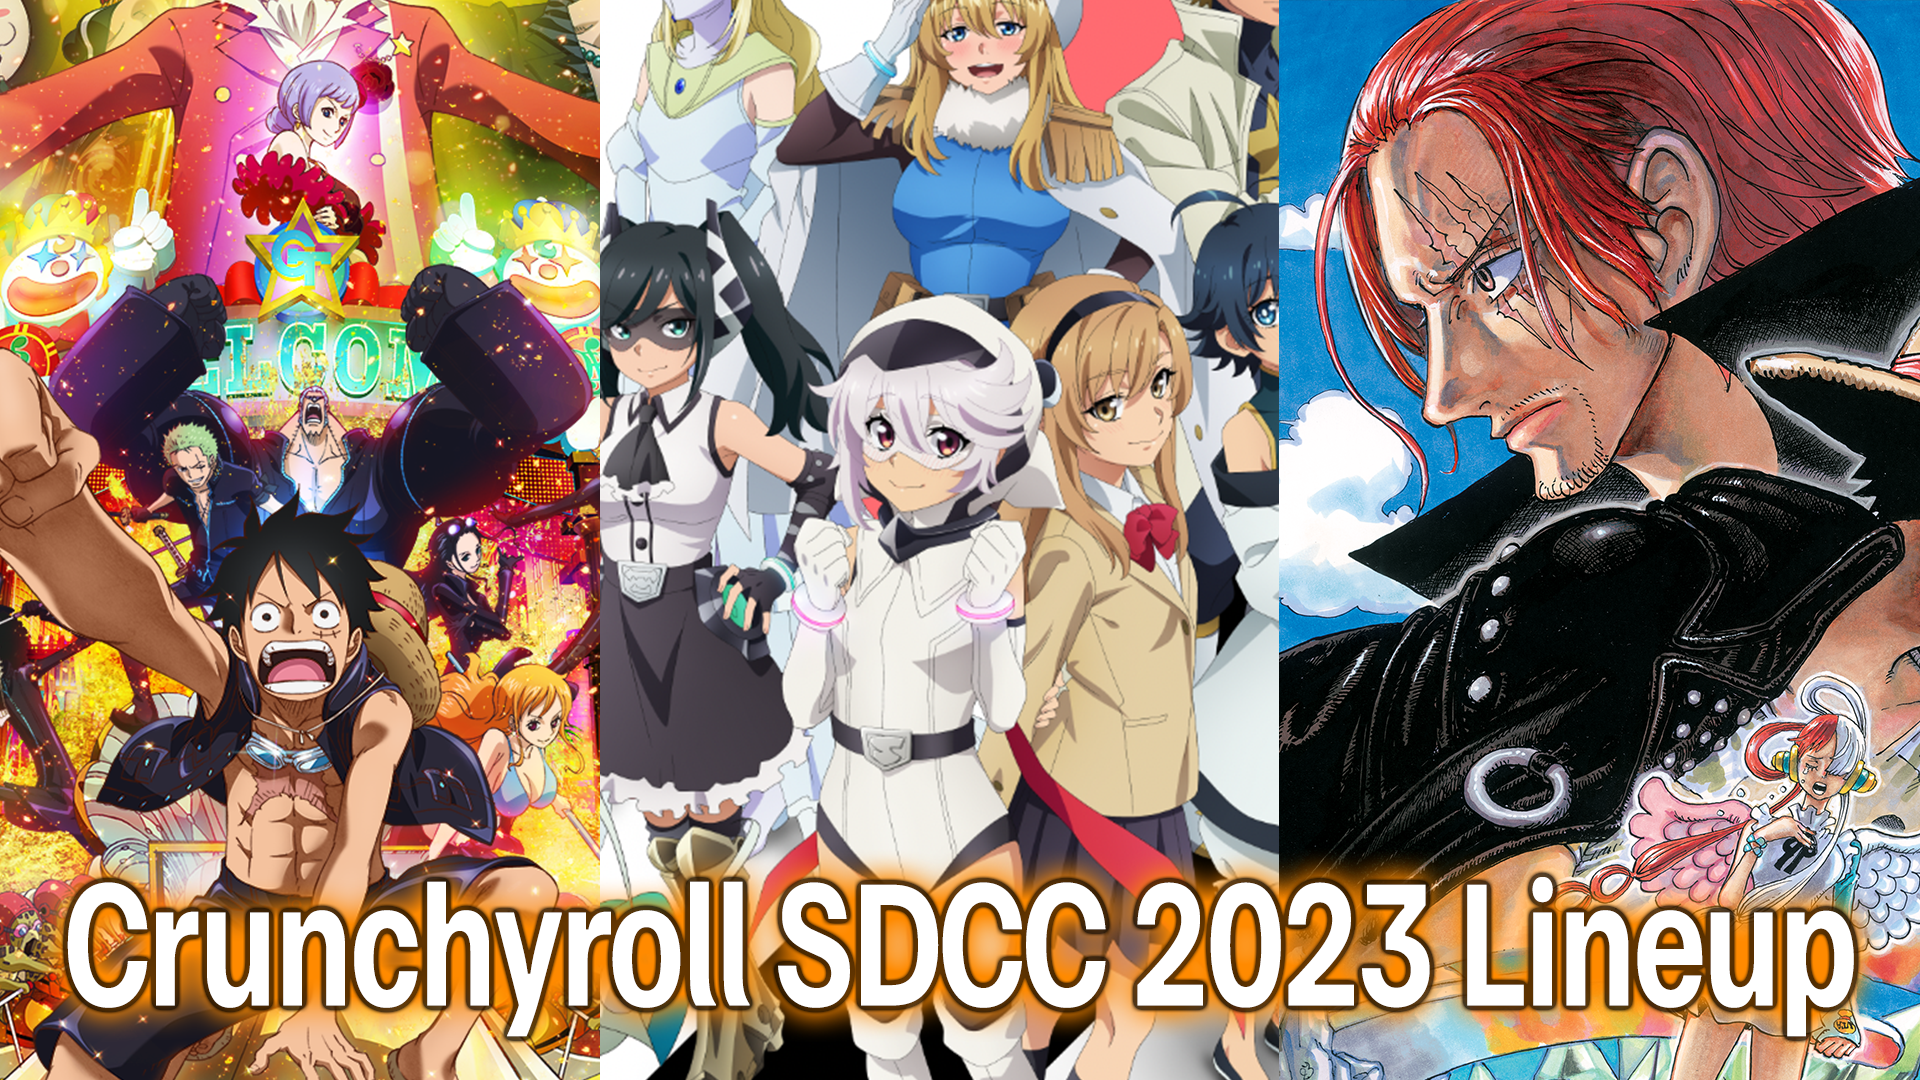 Crunchyroll Announces 5 New Acquisitions At SDCC 2023 - Noisy Pixel